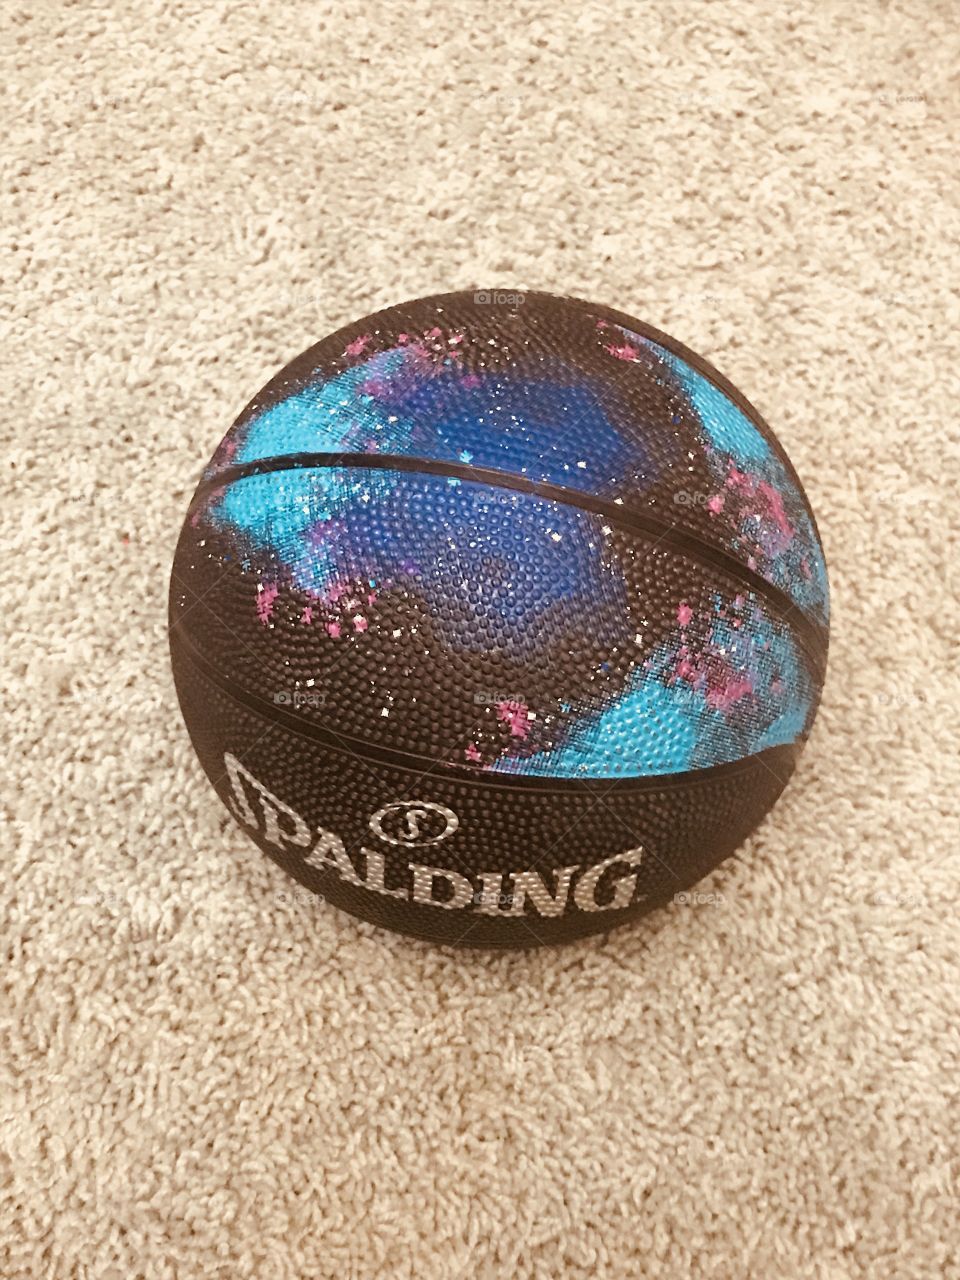  Galaxy basketball